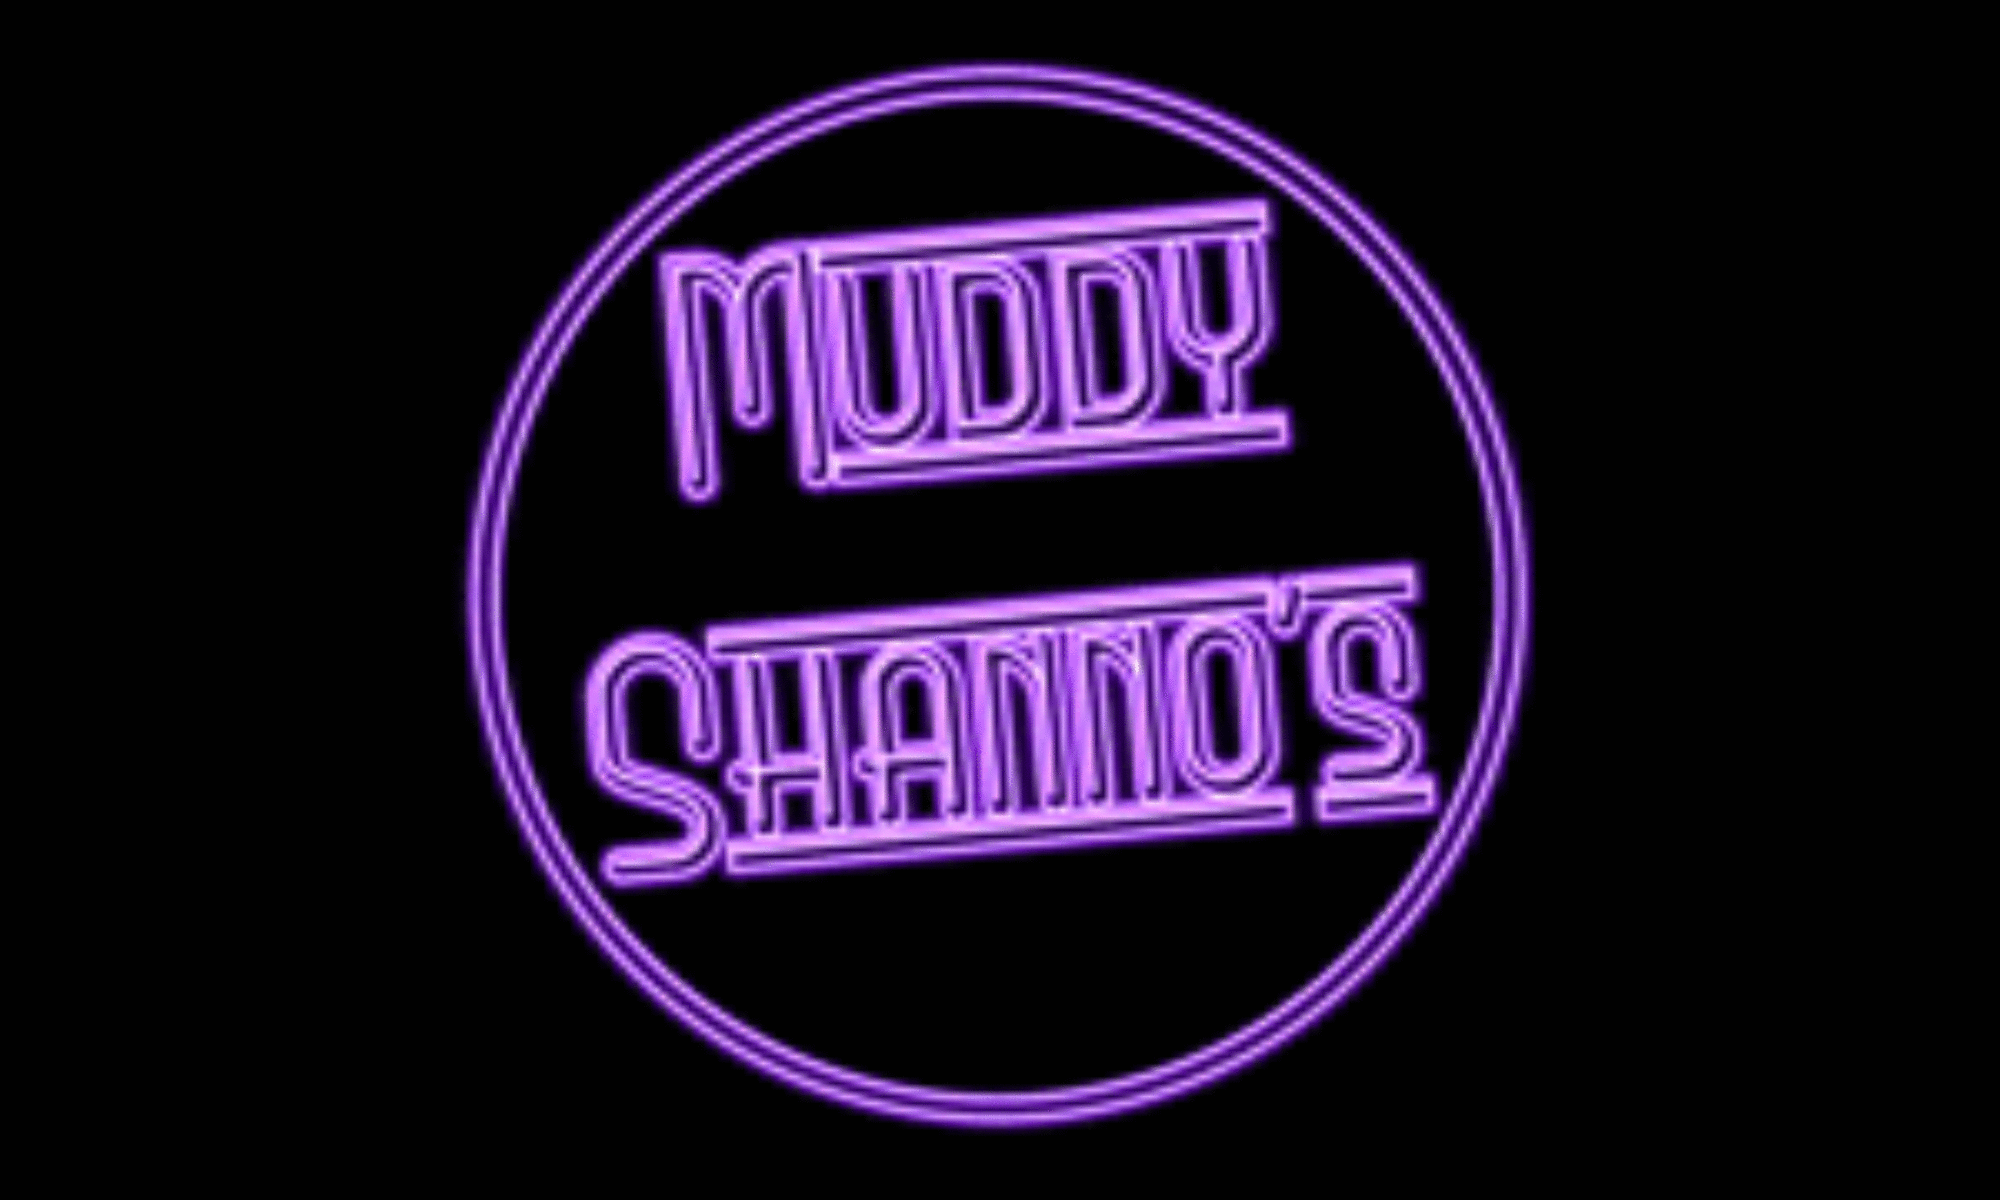 Muddy Shanno's